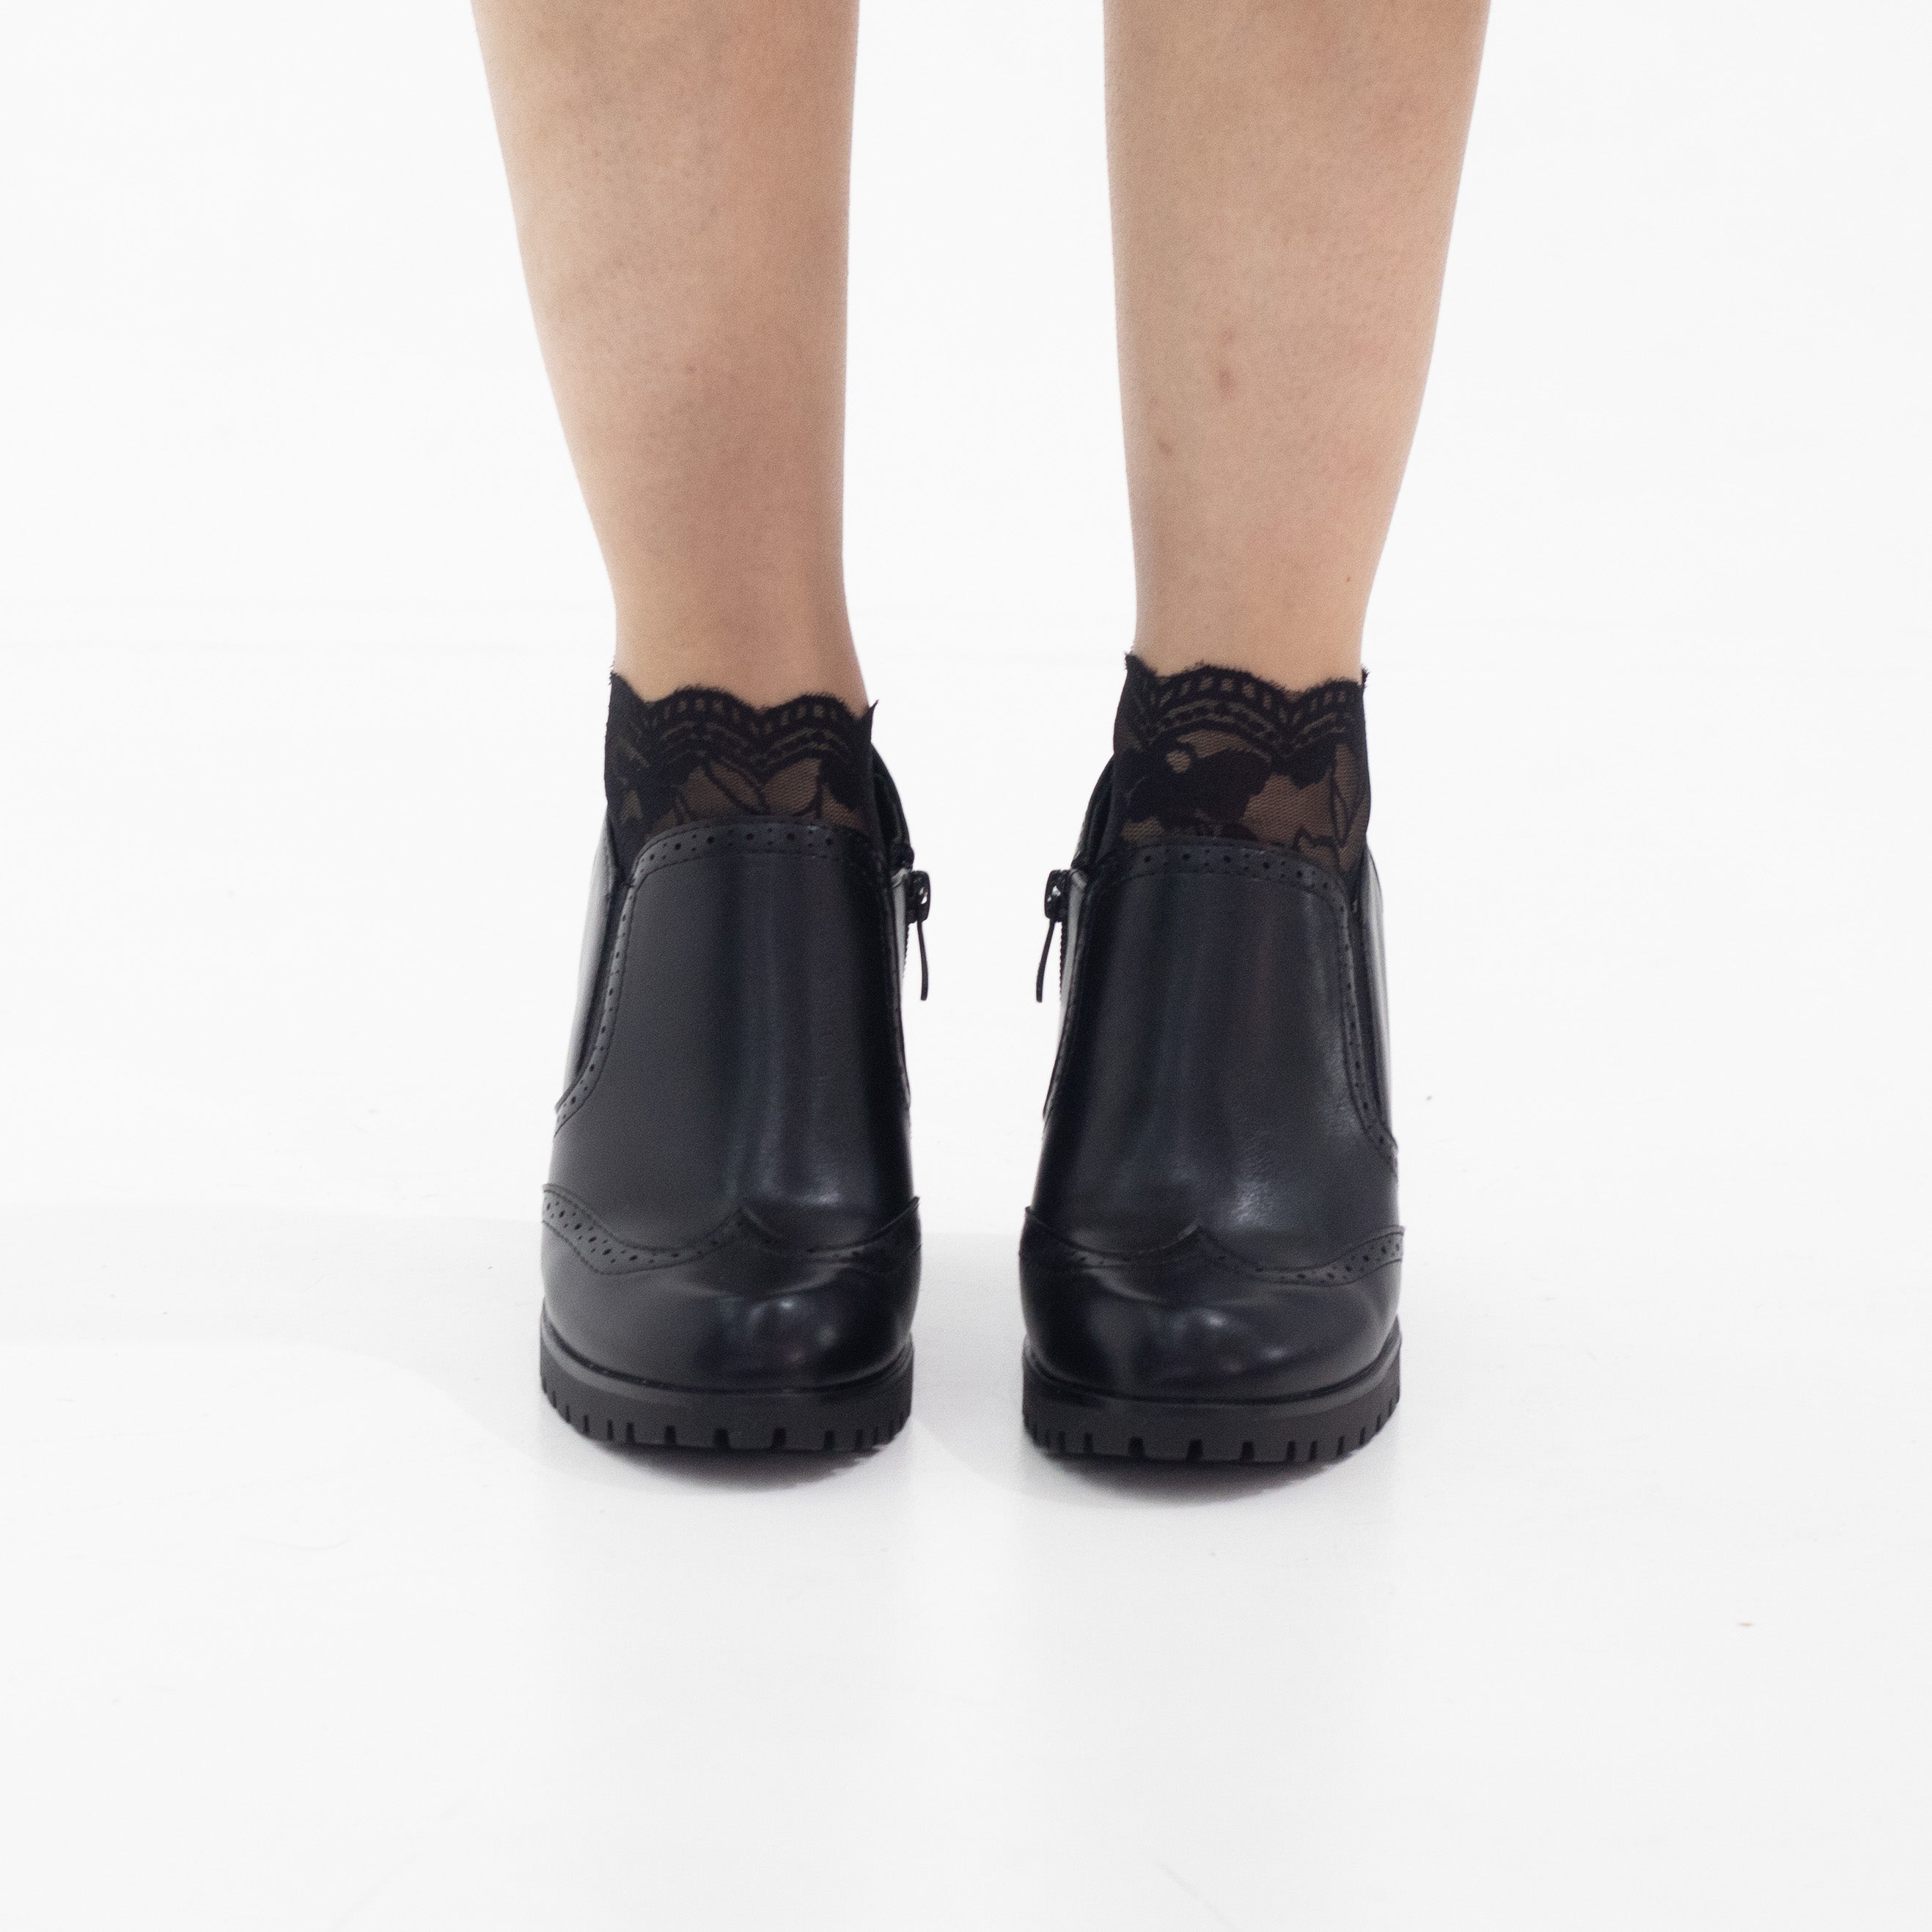 Black lace oxford 9cm high heel astoria